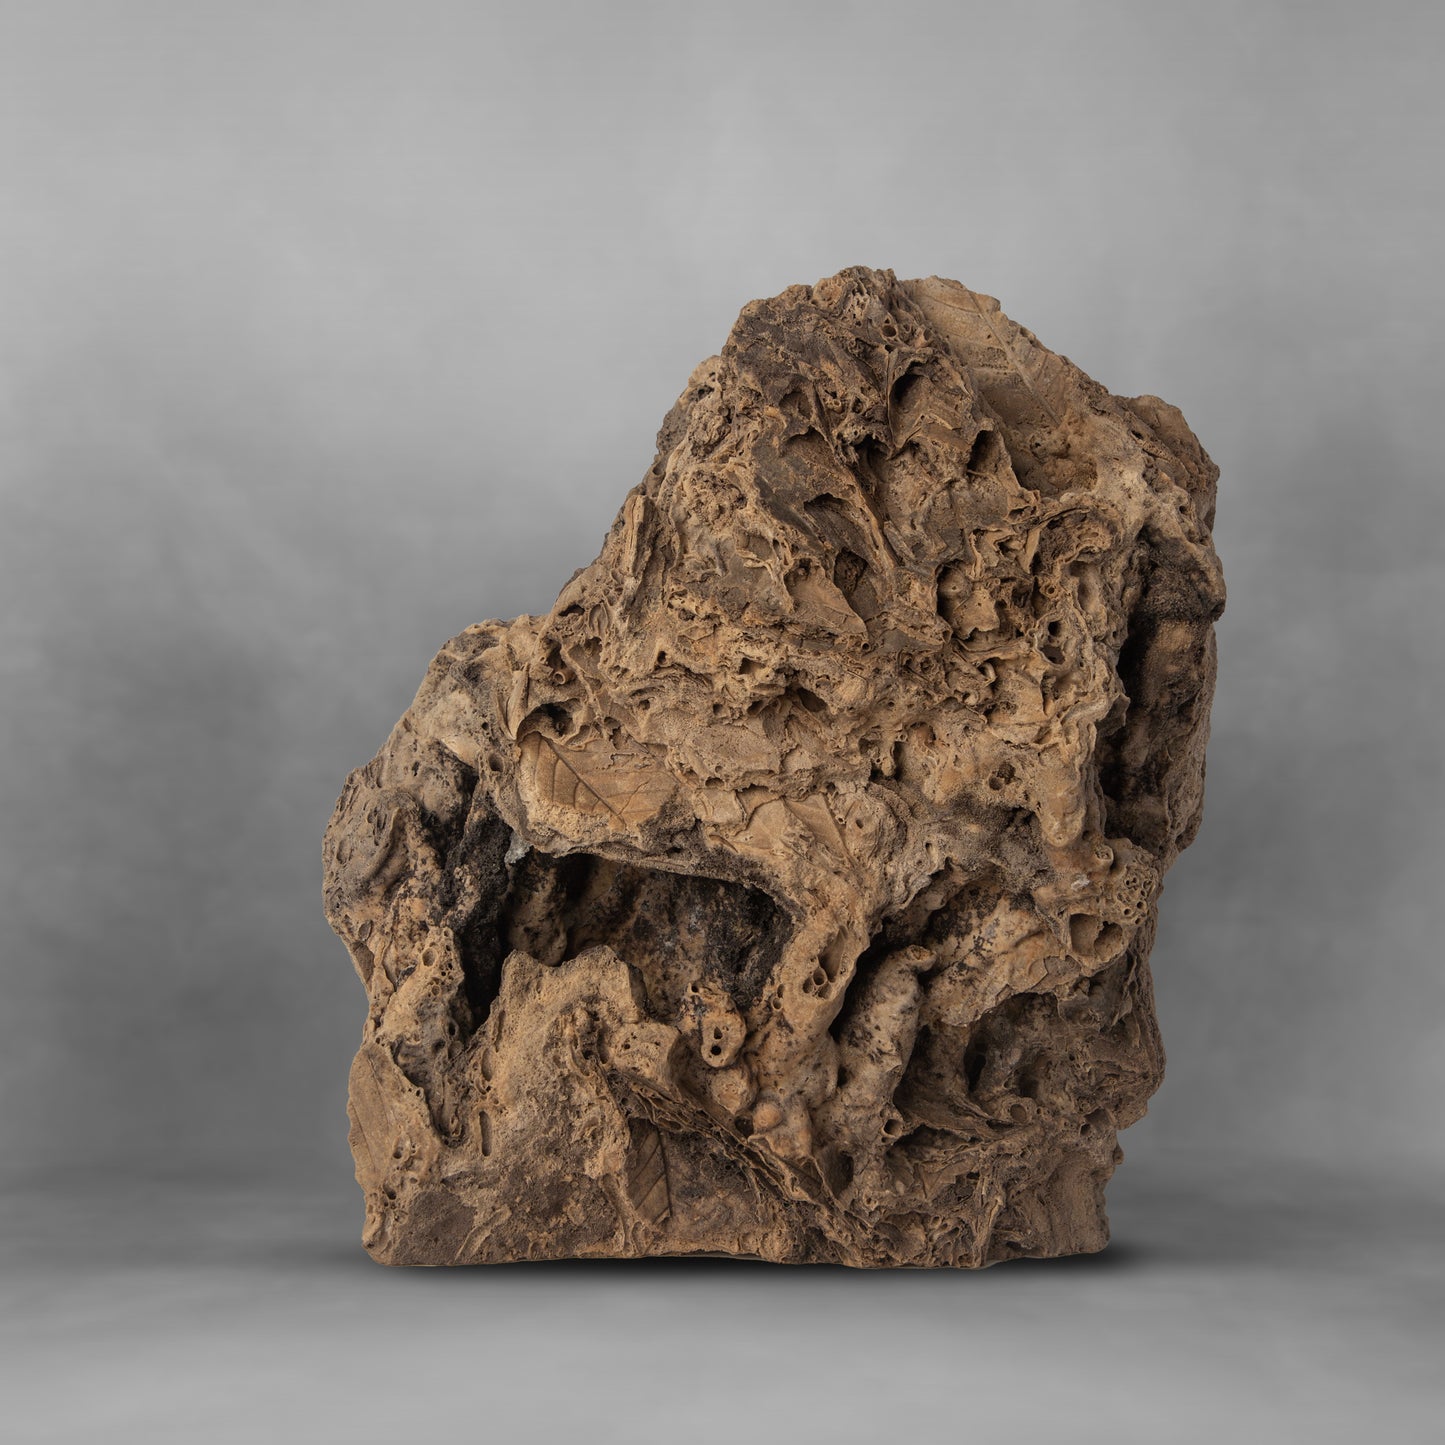 Attractive natural sculpture design in a decorative onyx rock